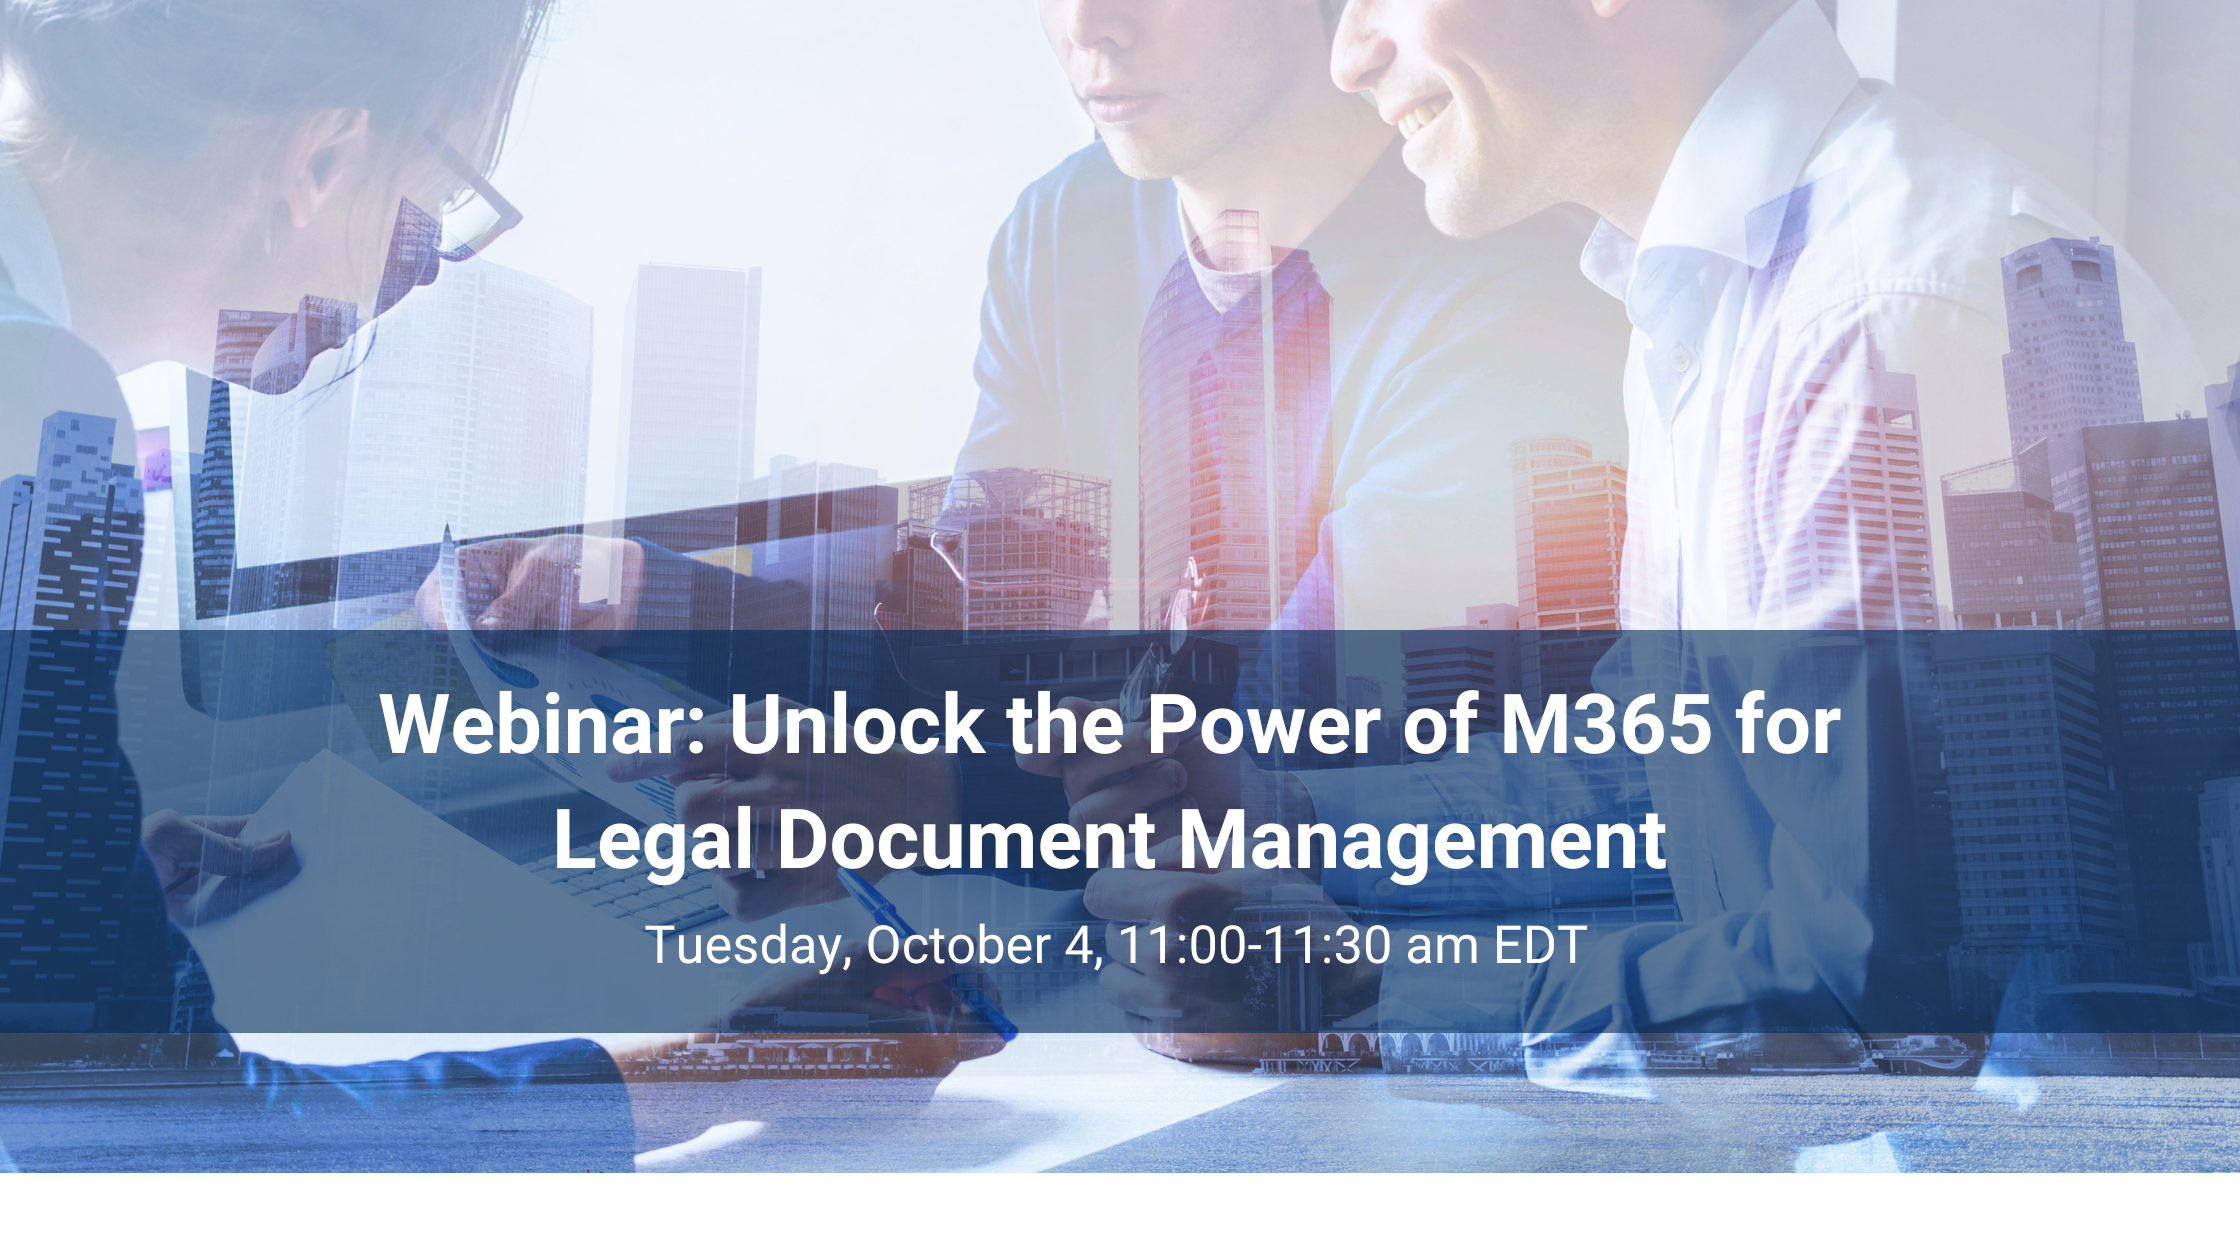 Unlock the Power of M365 for Legal Document Management Webinar Image